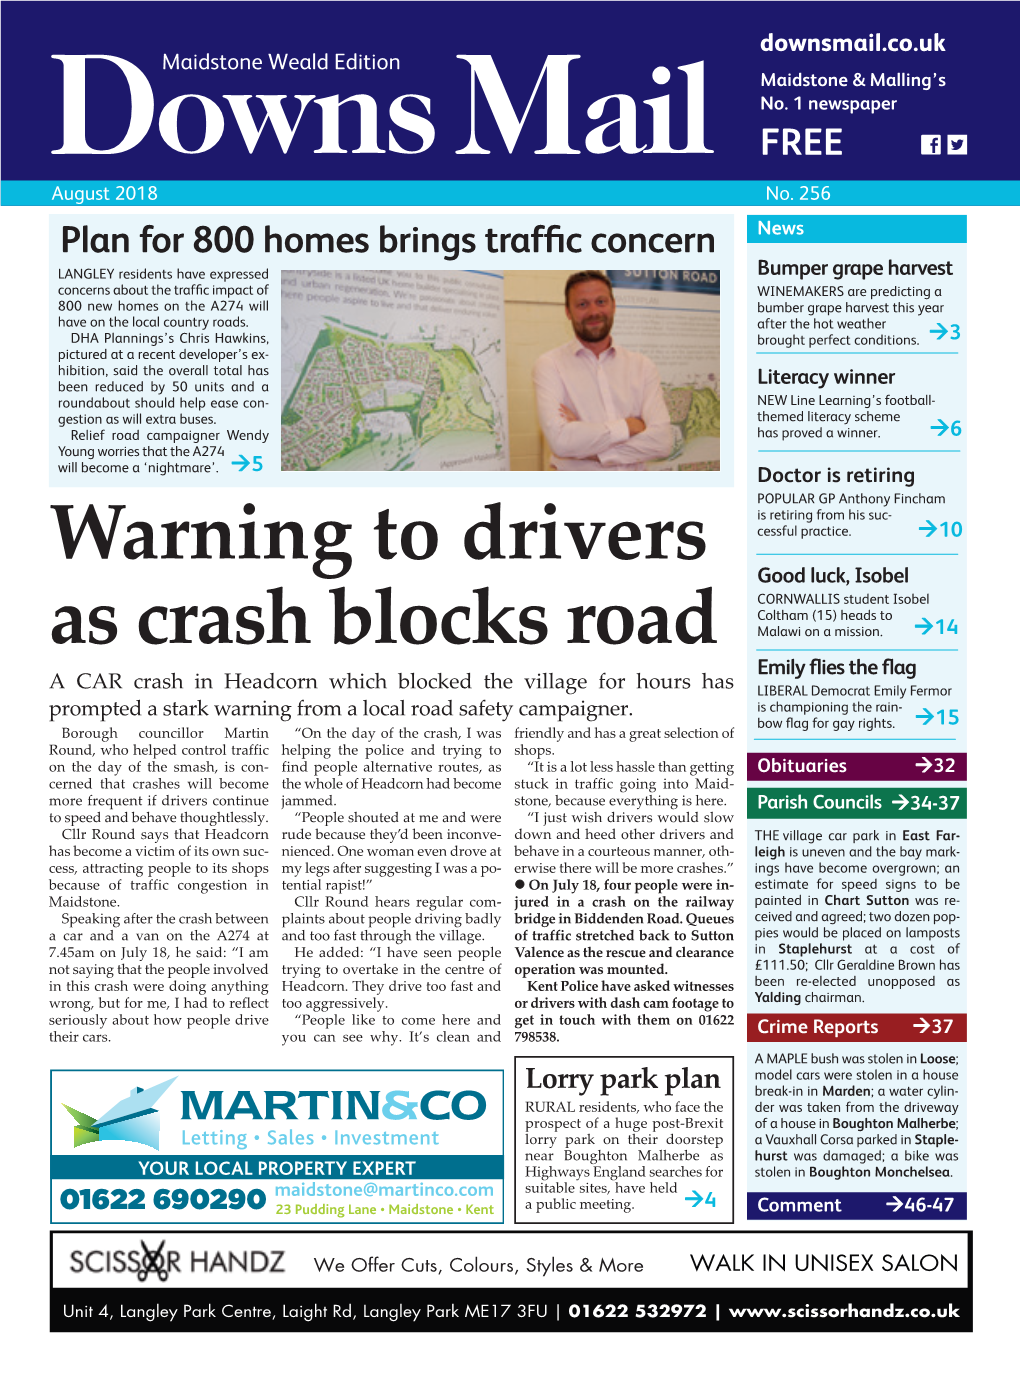 Warning to Drivers As Crash Blocks Road